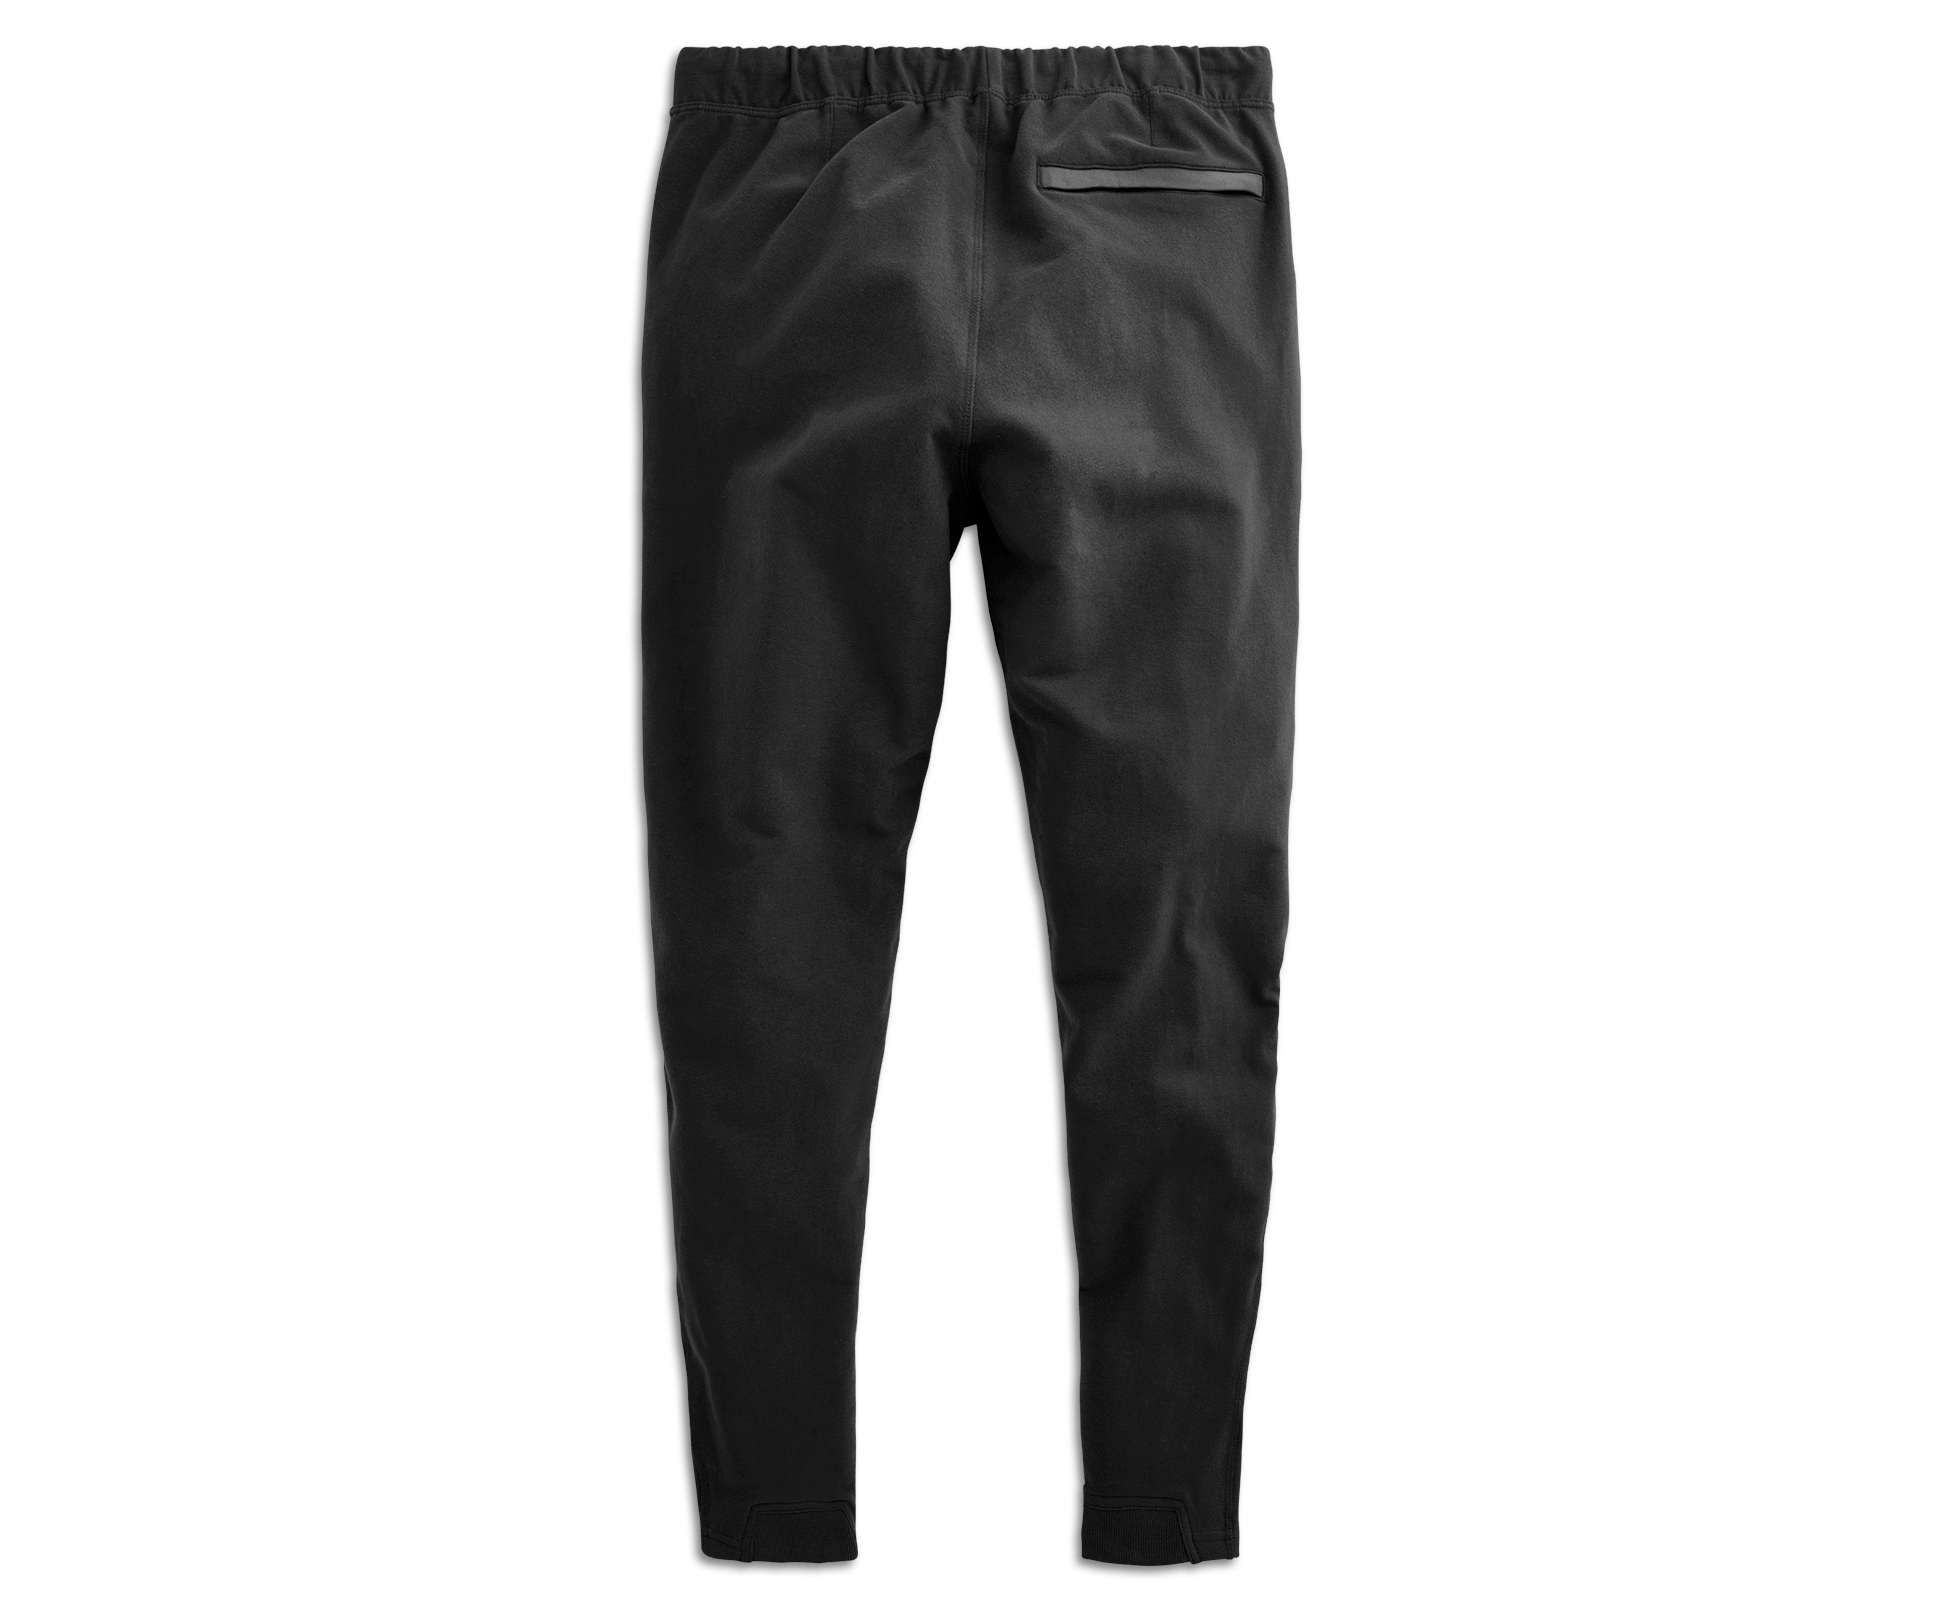 2-Pack ACE Sweatpants - Tall Grey Heather / Black